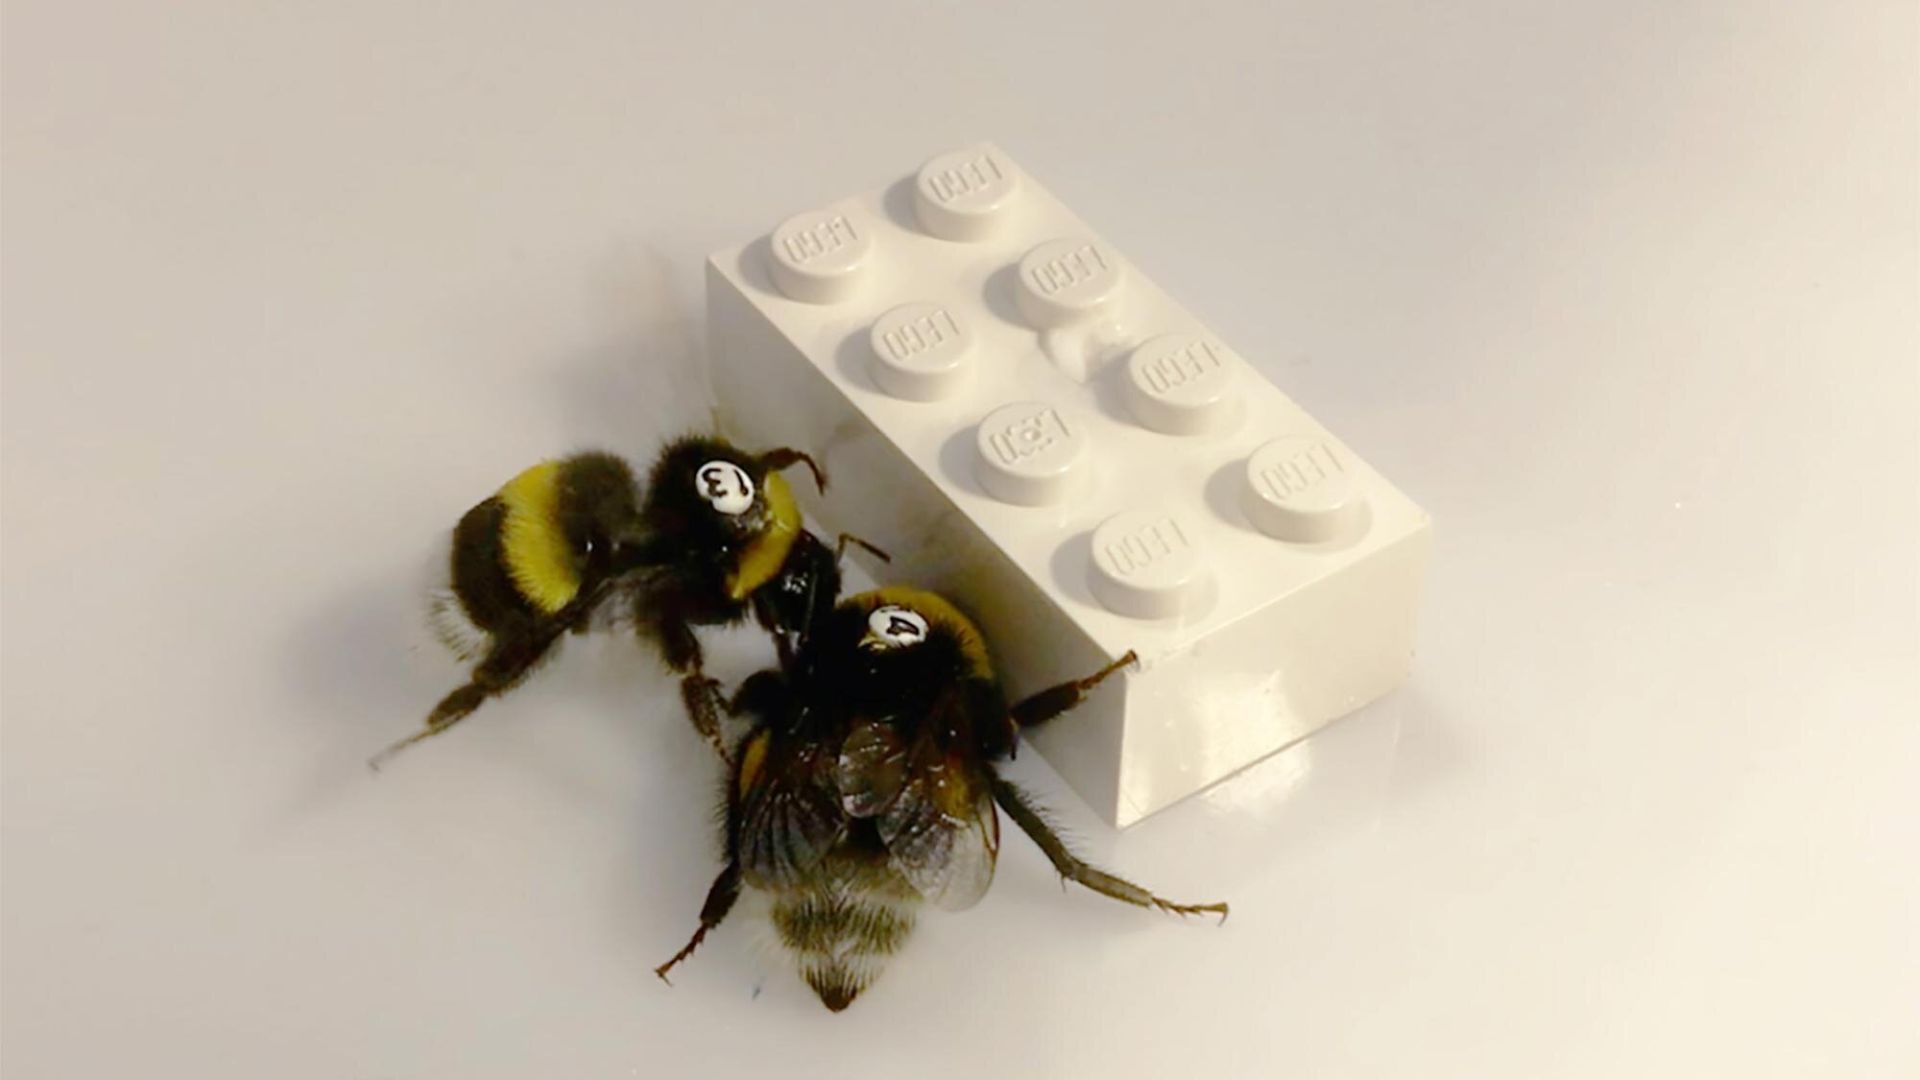 Watch how bumblebees push Lego blocks showing super teamwork skills [Video]